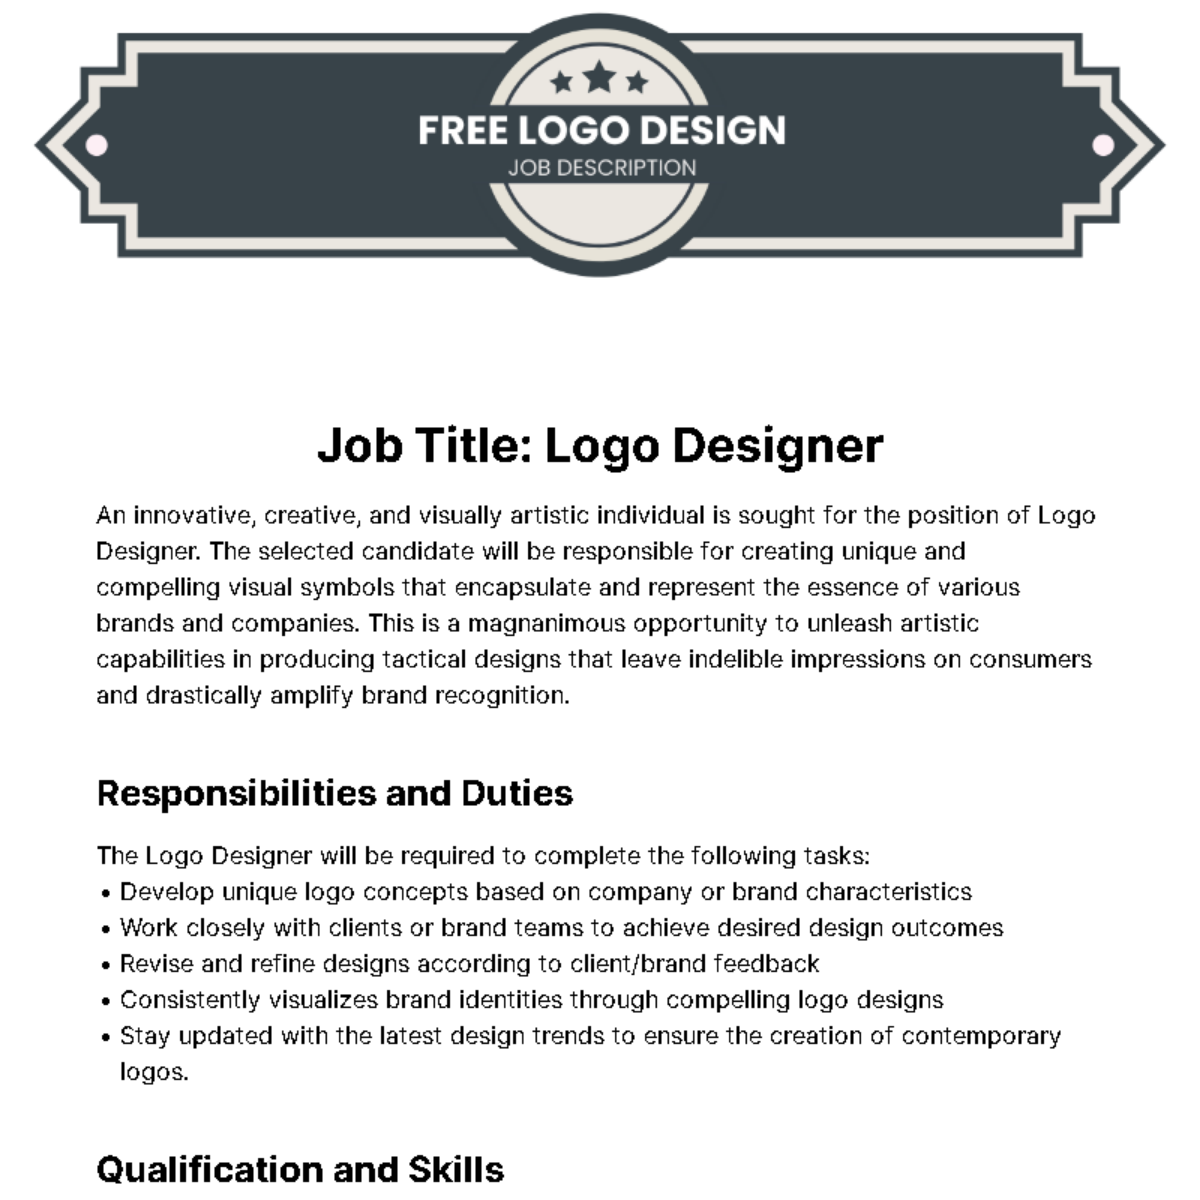 Free Logo Design Job Description Template